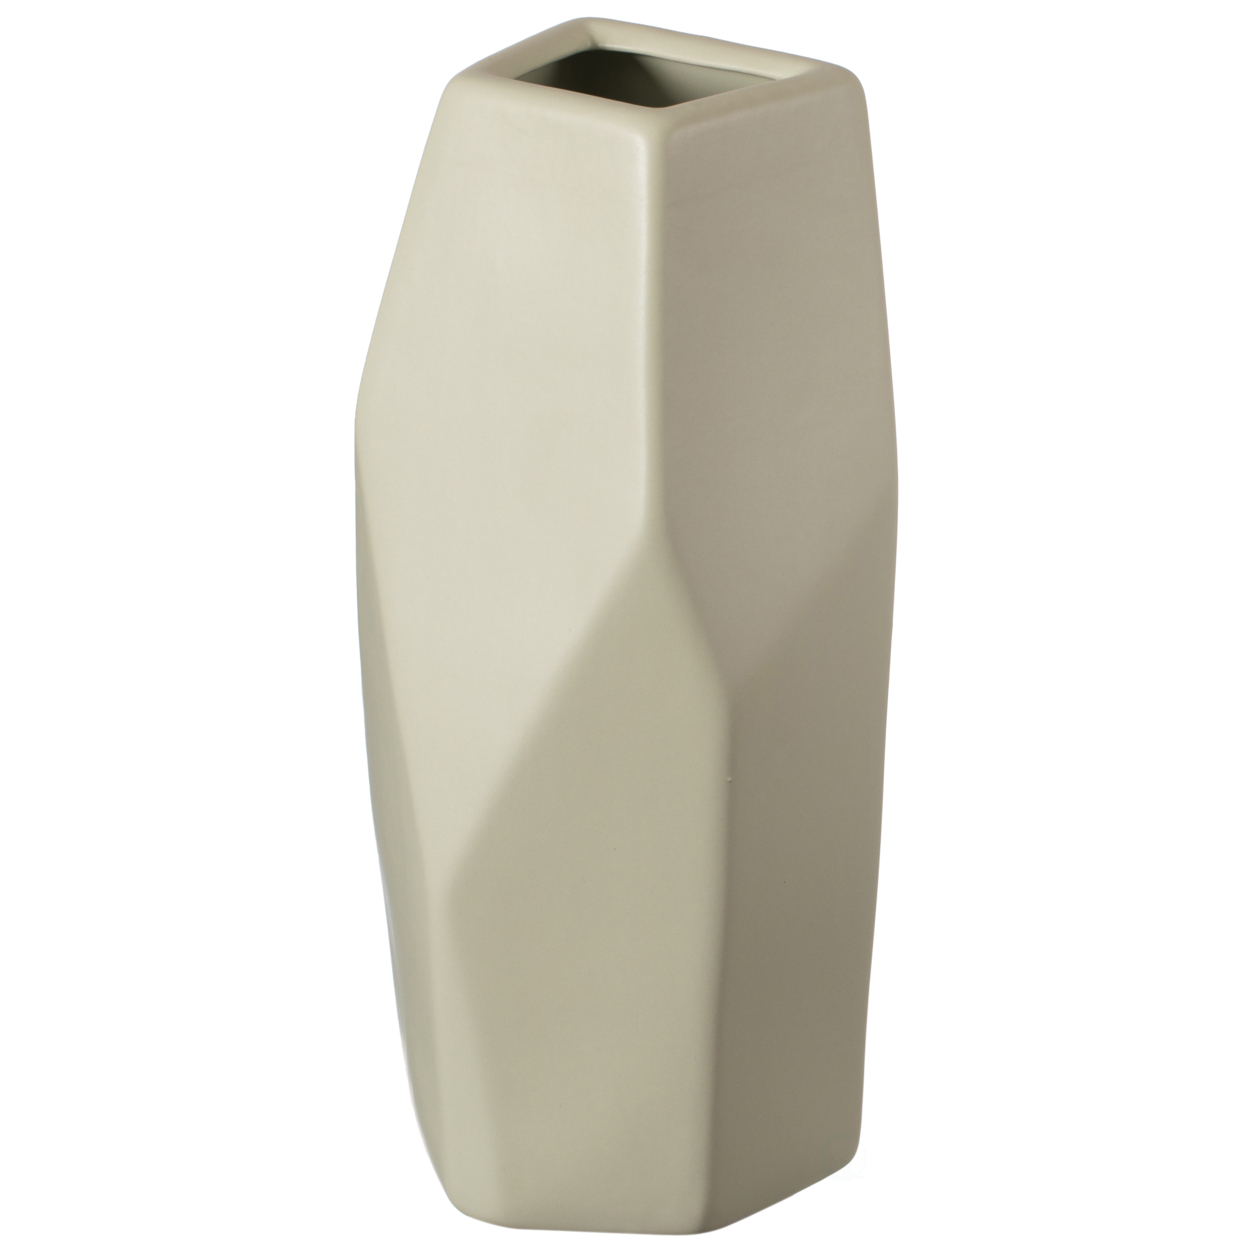 Decorative Ceramic Multi Paned Vase, Modern Style Centerpiece Table Vase - Multi